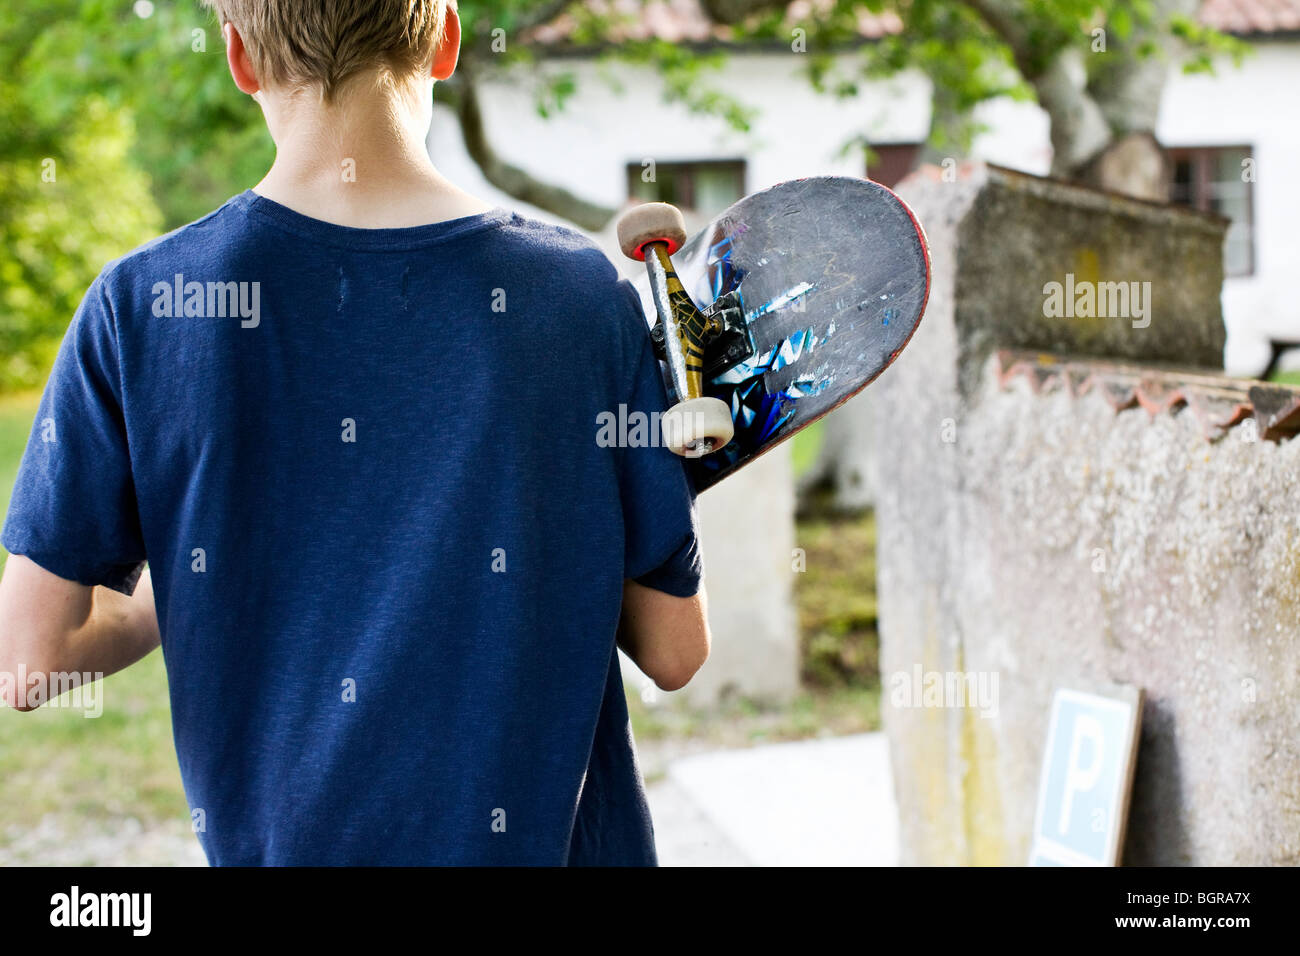 Boy with a skateboard, Sweden Stock Photo - Alamy